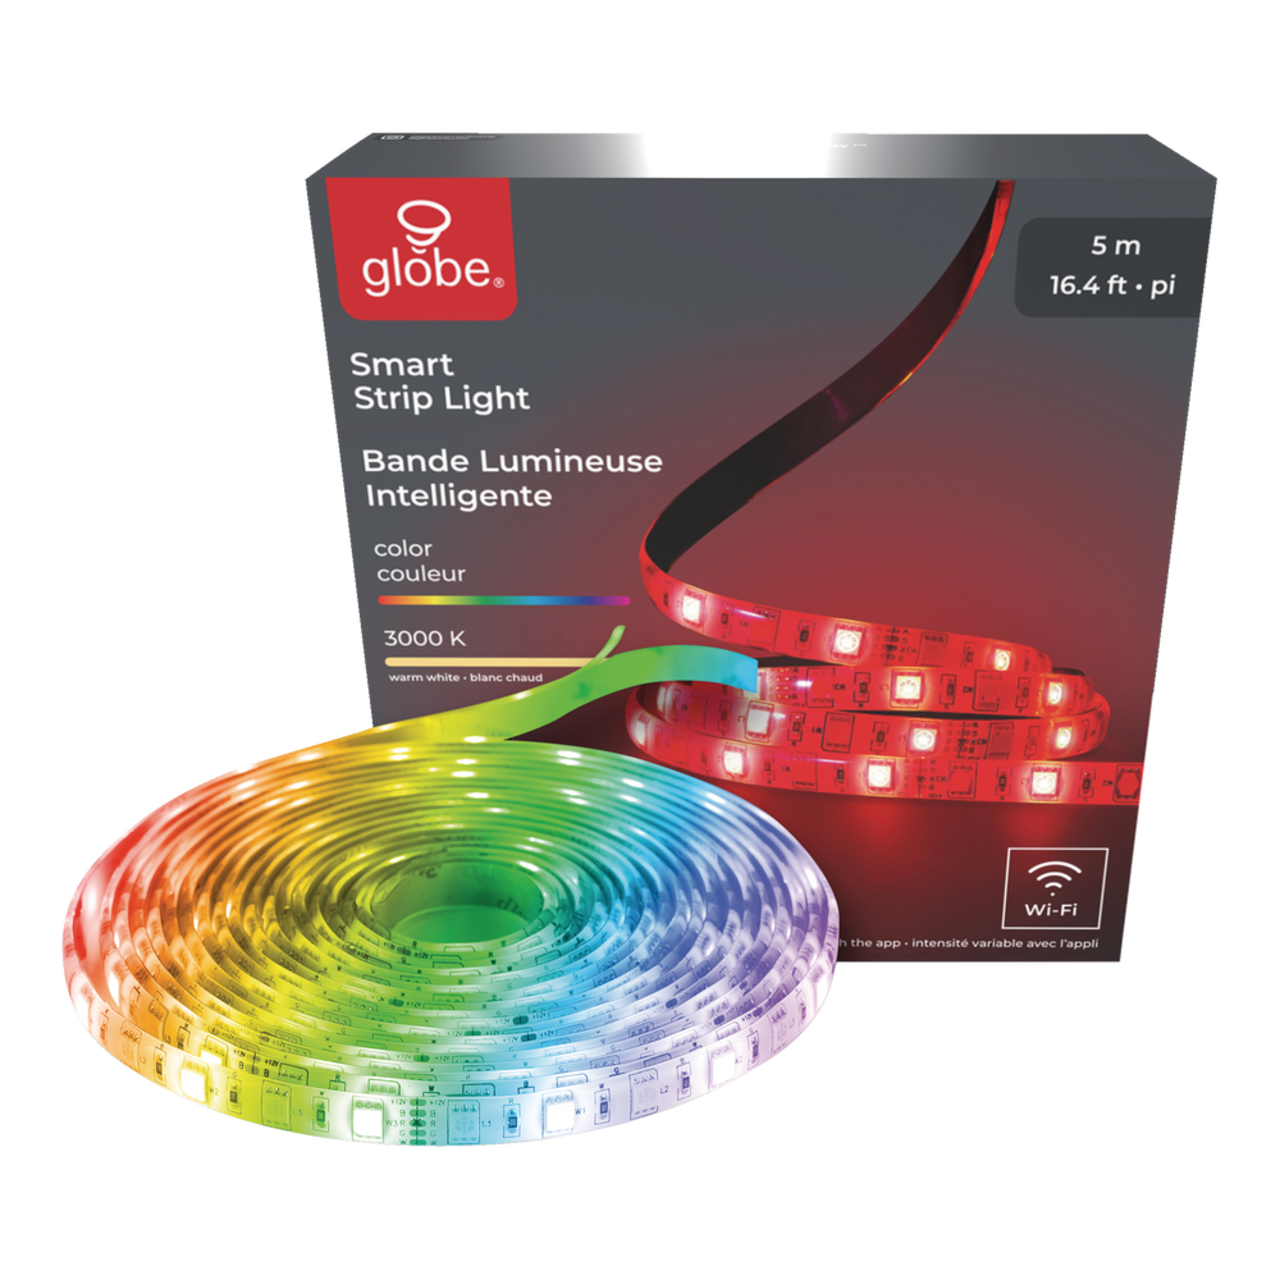 Govee RGBIC LED Smart Strip Light 16.4ft 196-in Smart Plug-in LED Under  Cabinet Strip Light at